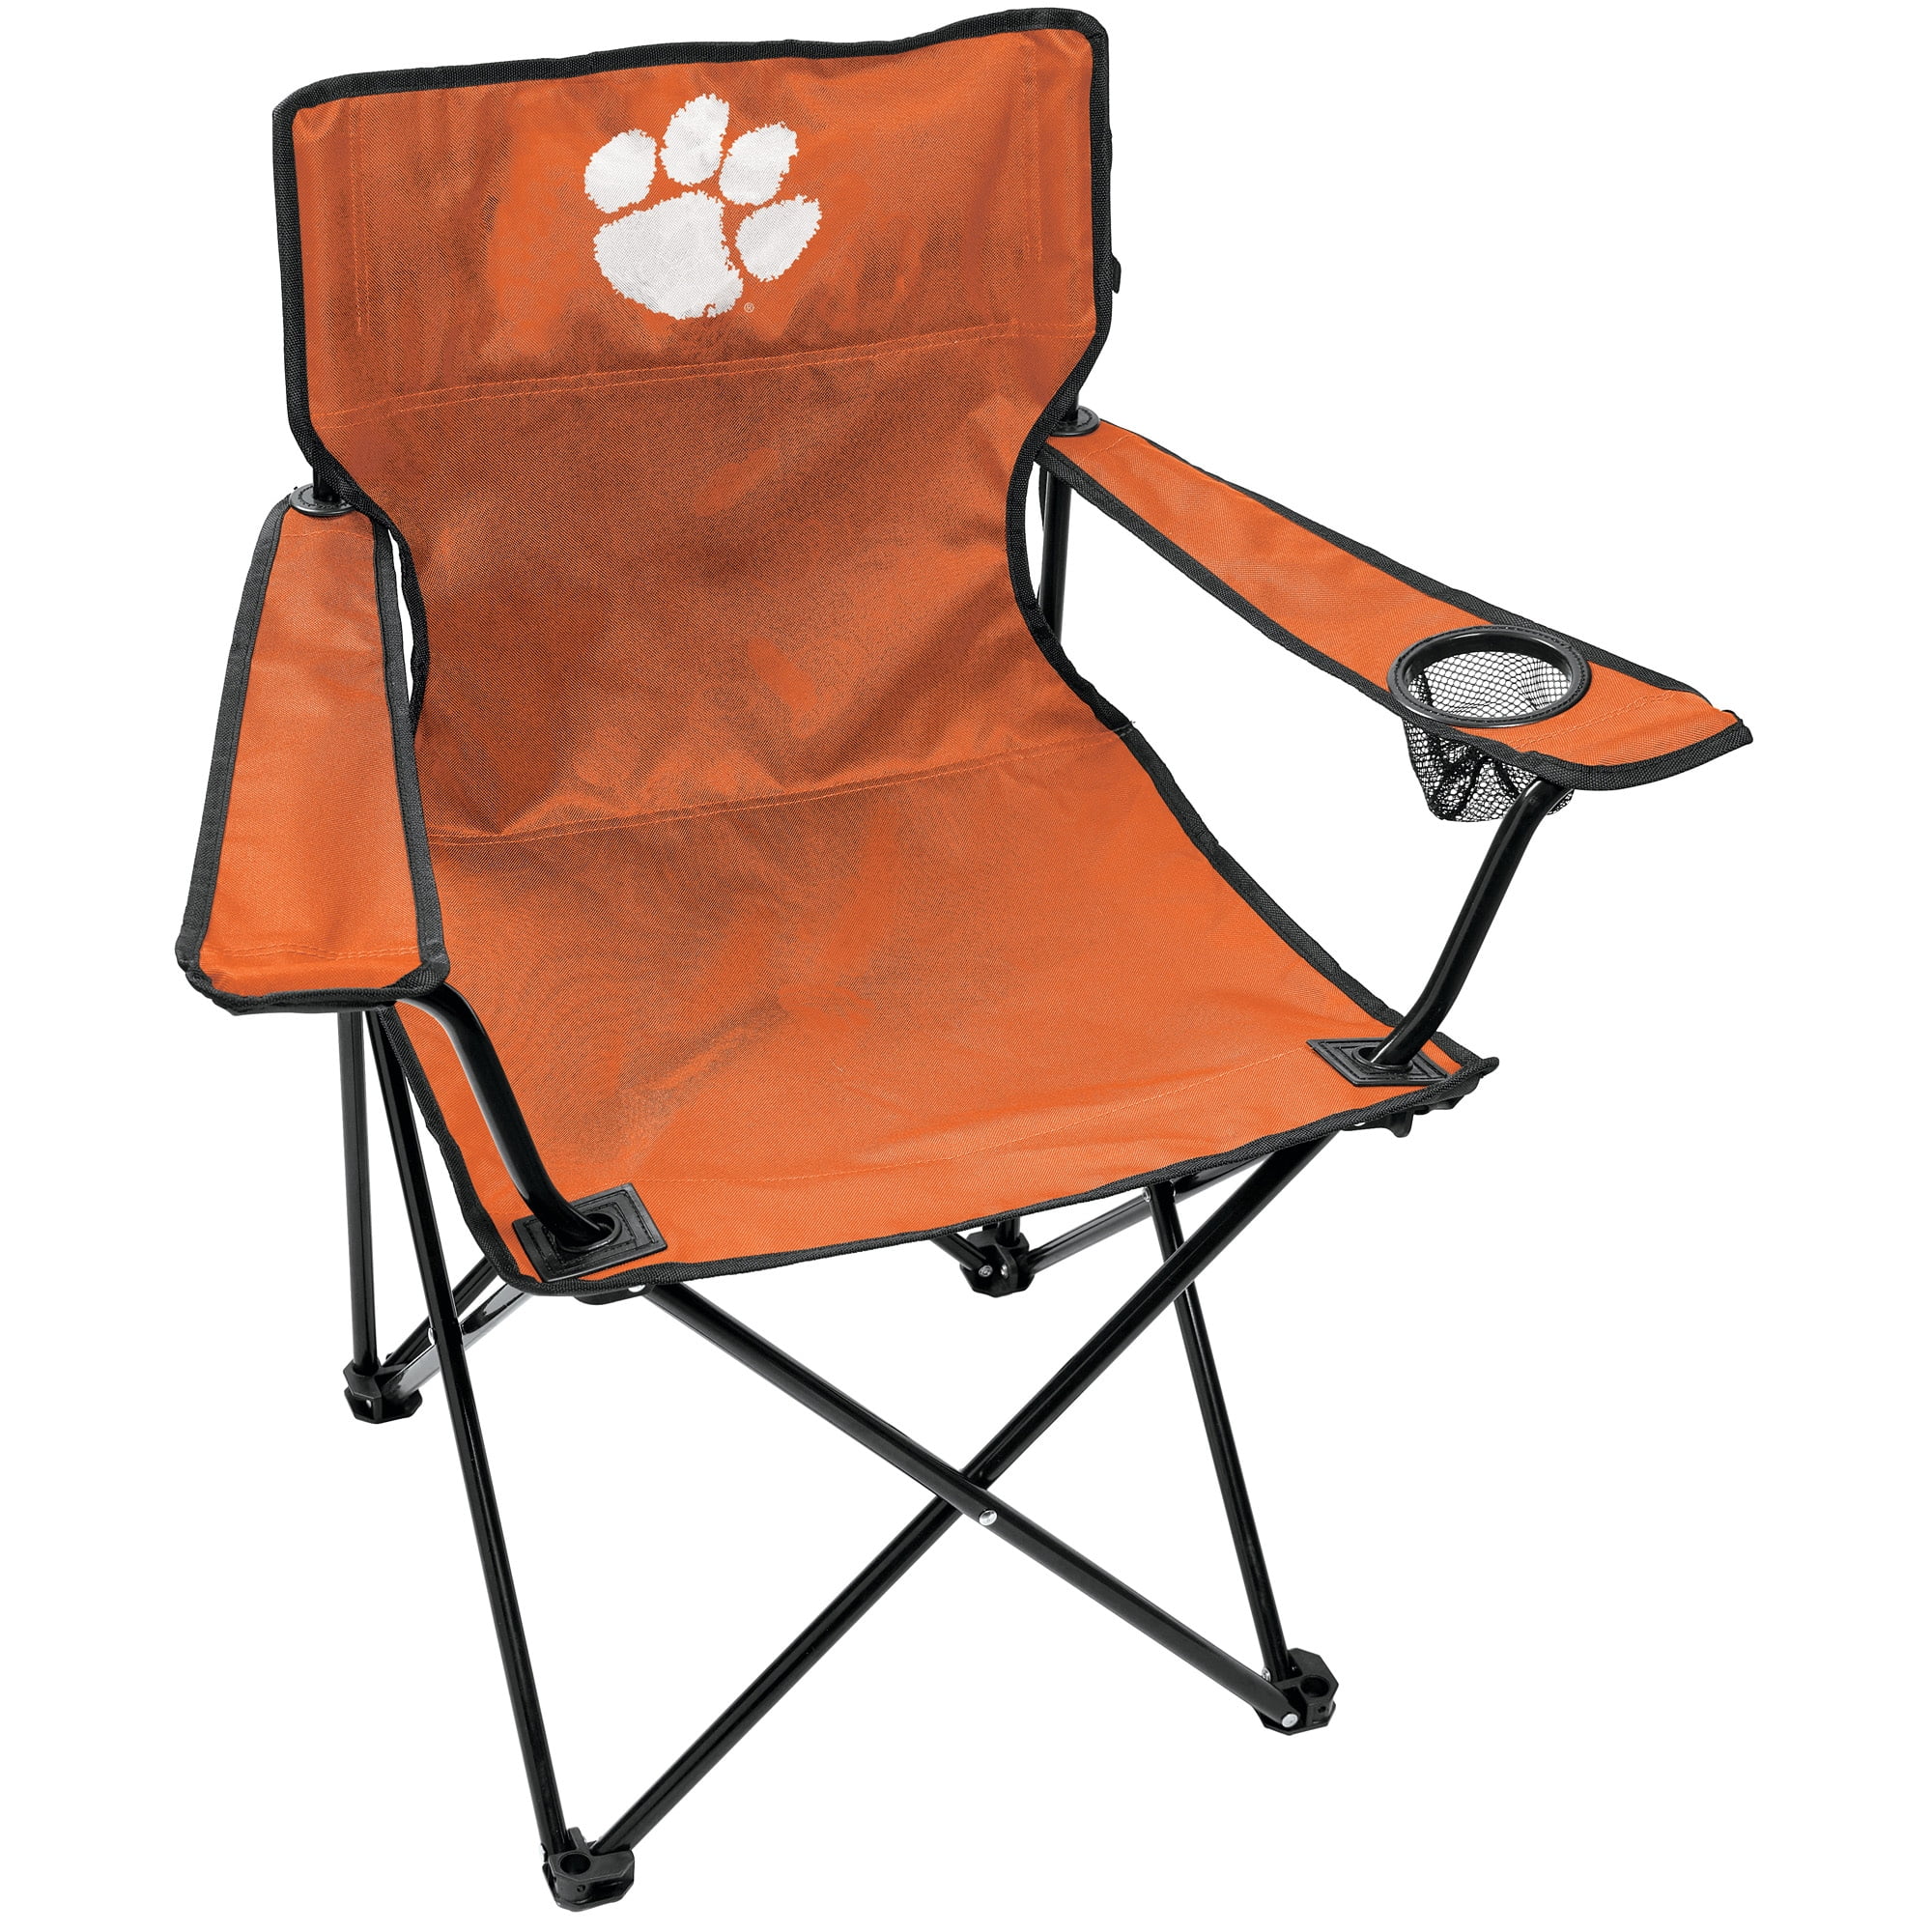 RAWLINGS NCAA XL Lineman Tailgate and Camping Folding Chair, NC